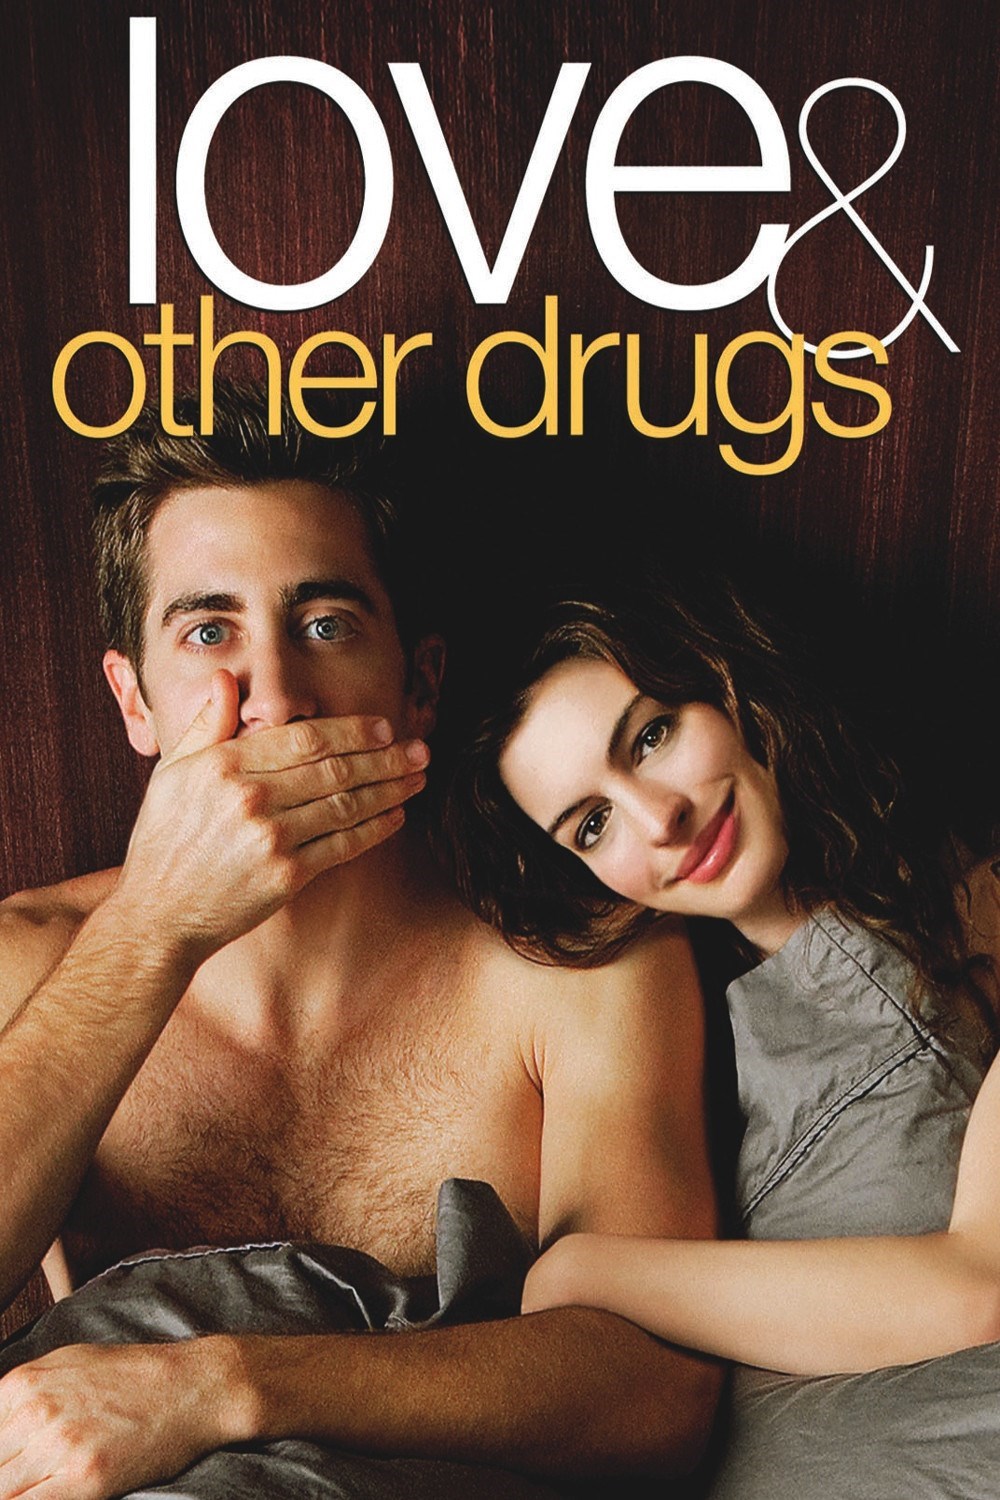 Love & Other Drugs HD wallpapers, Desktop wallpaper - most viewed